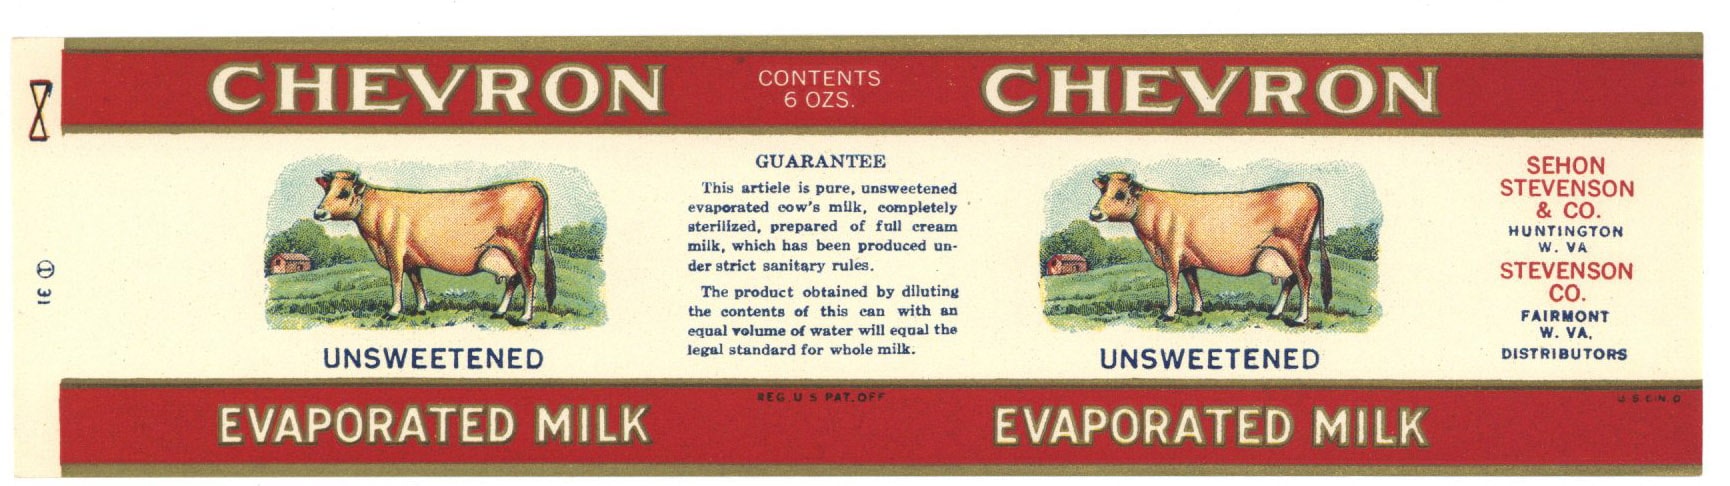 Chevron Brand Vintage Milk Can Label